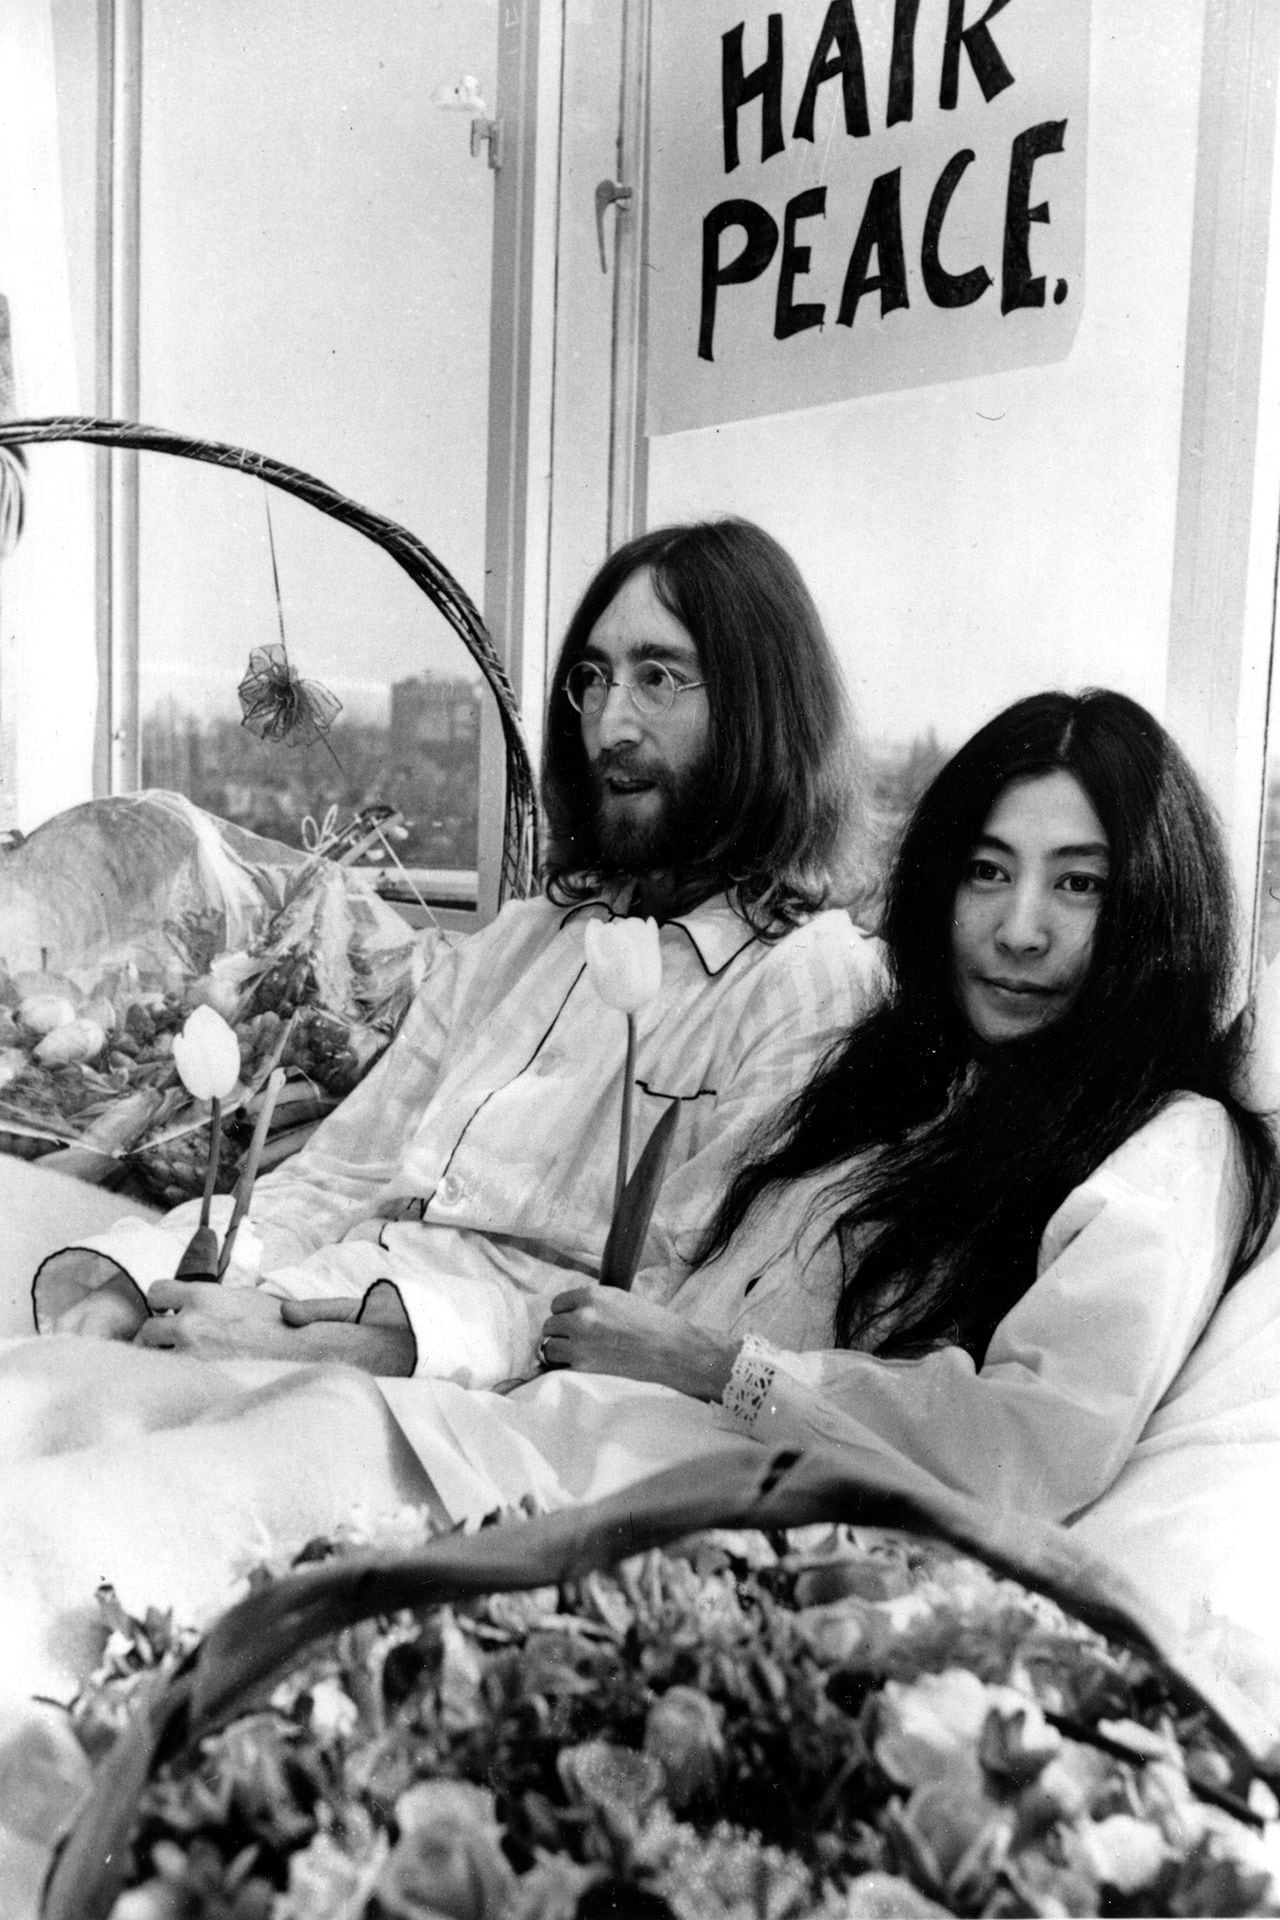 El cumpleaños número 80 de John Lennon